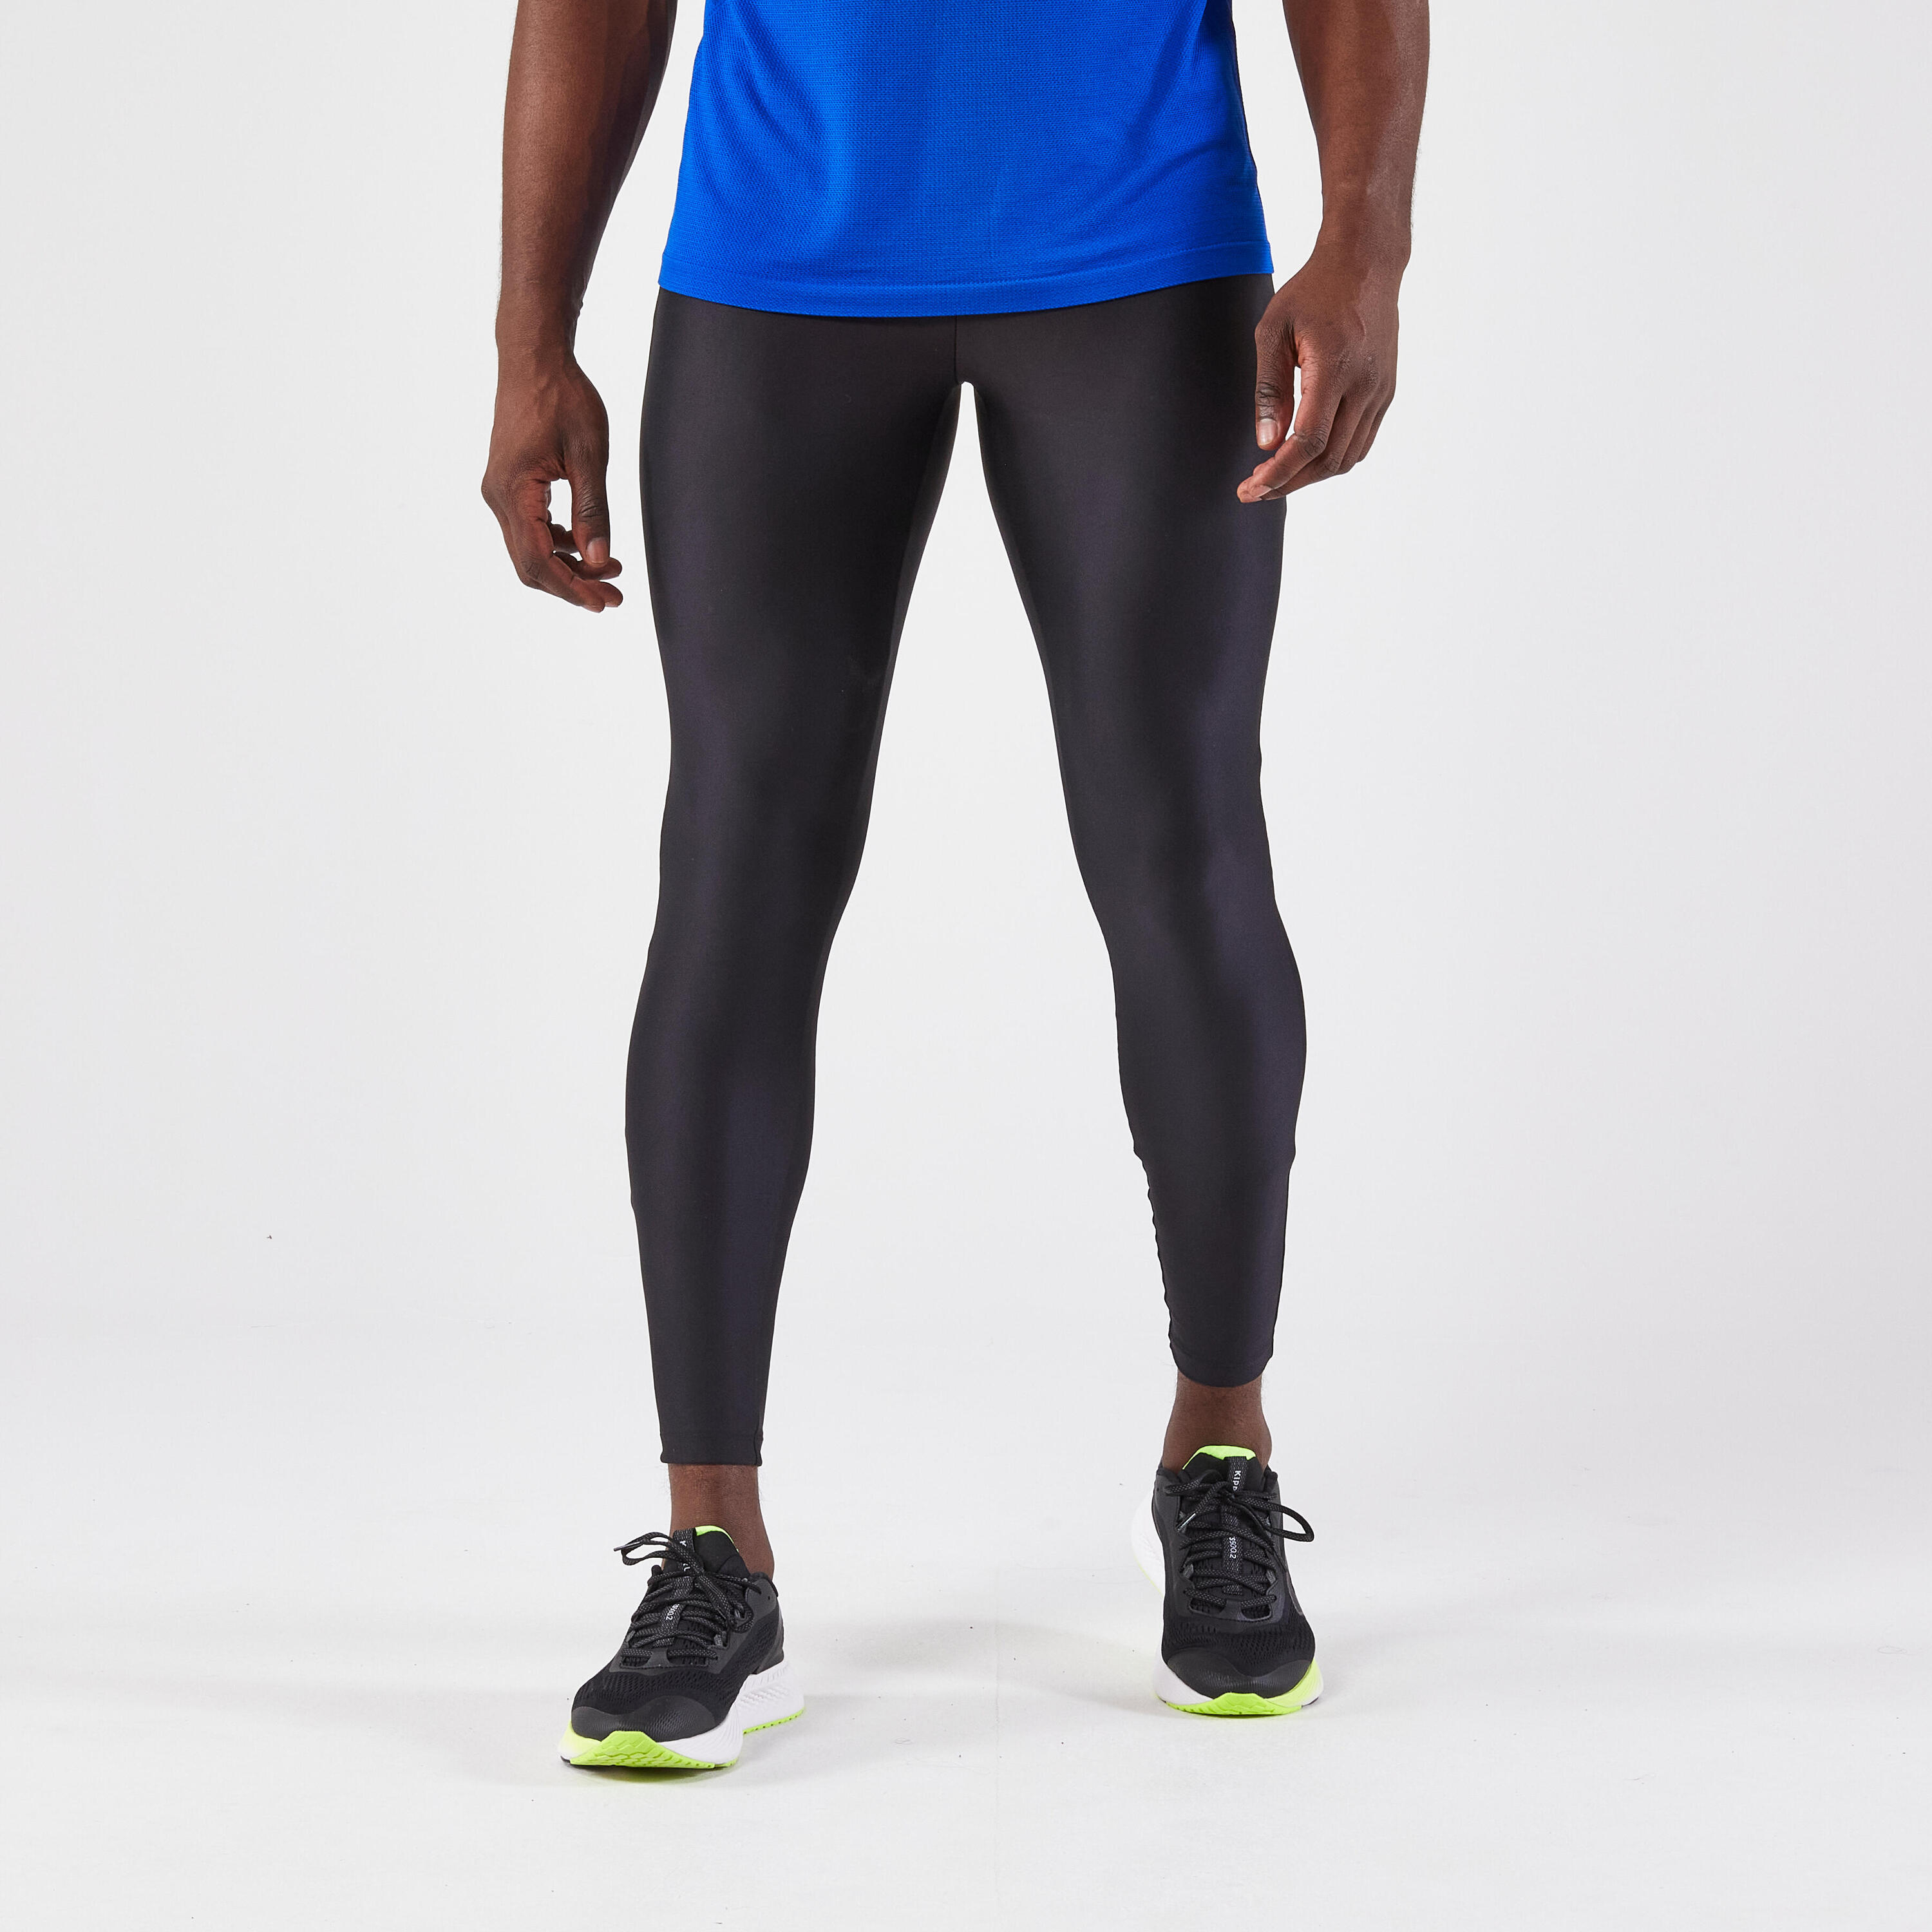 Men's Running Tights Run Dry - Black